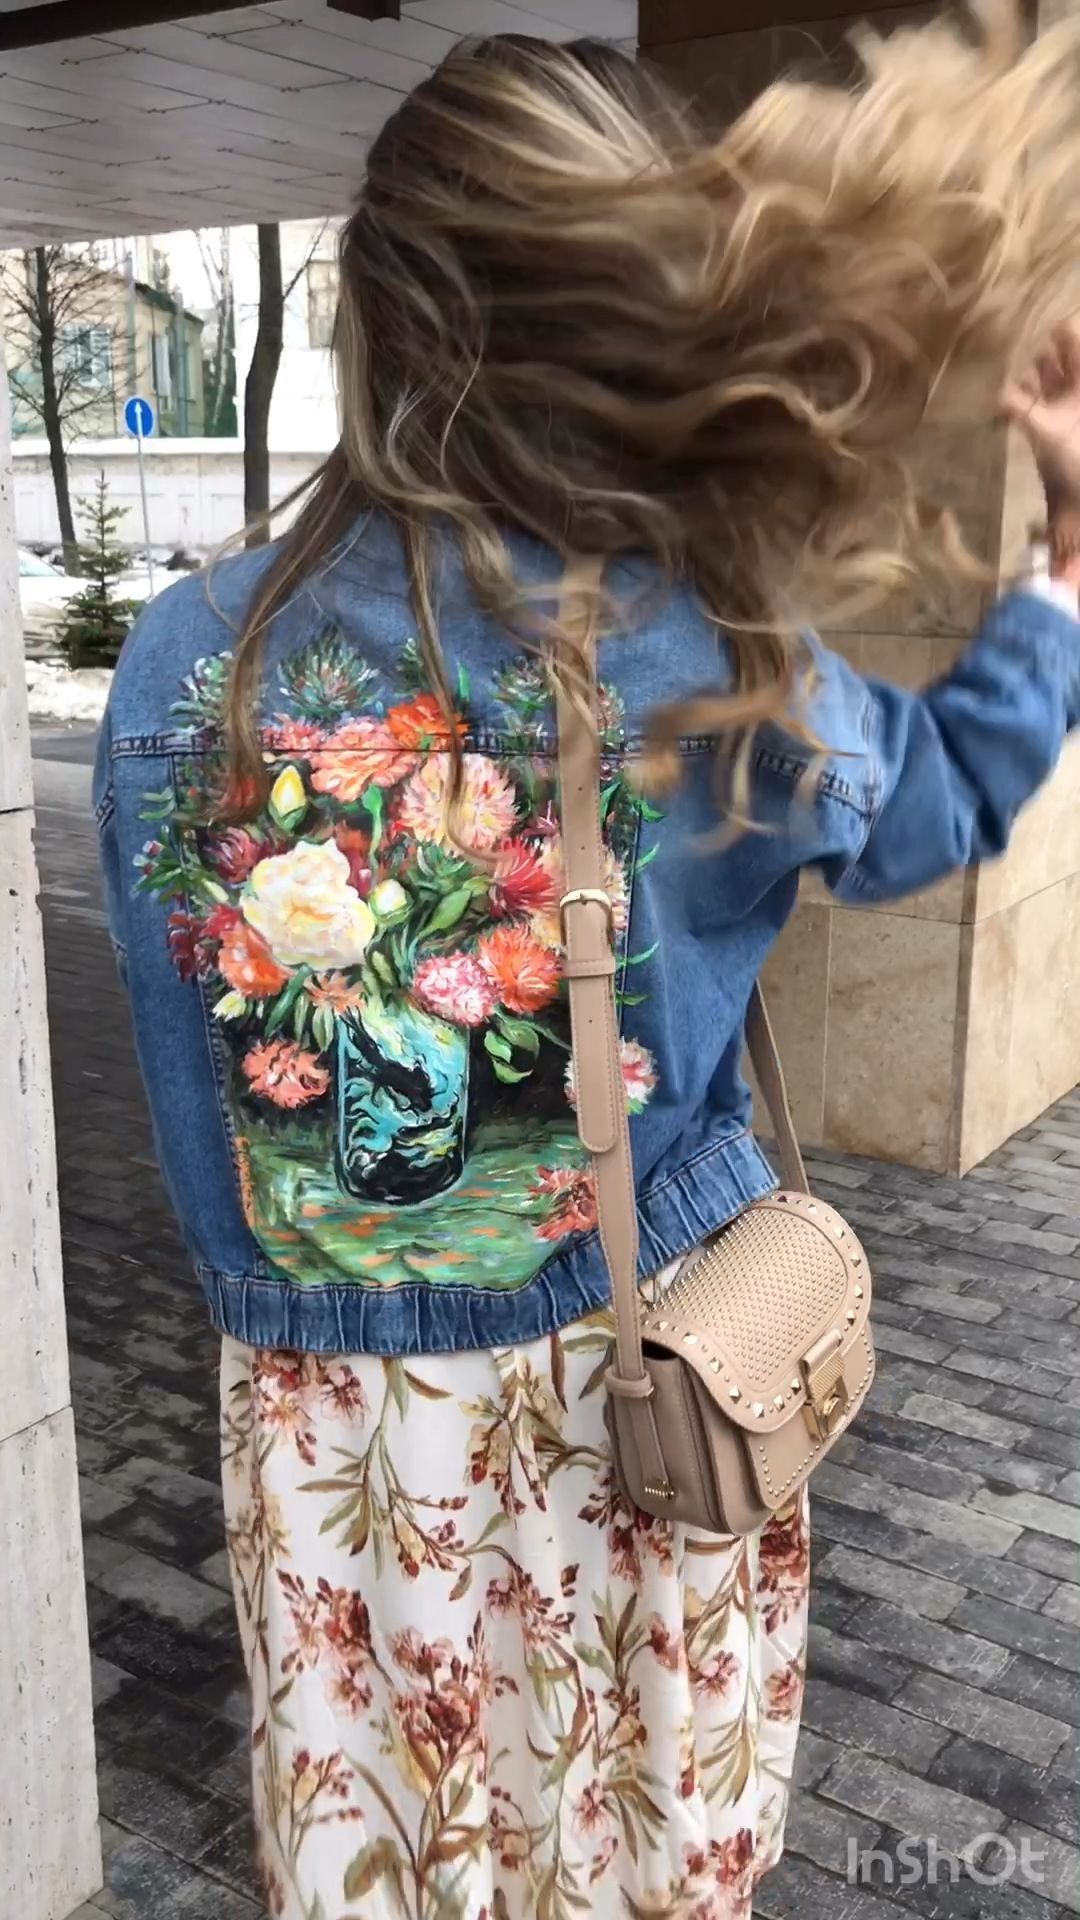 Painted custom jacket Van Gogh vase of carnations price for | Etsy - Painted custom jacket Van Gogh vase of carnations price for | Etsy -   15 beauty Fashion clothing ideas